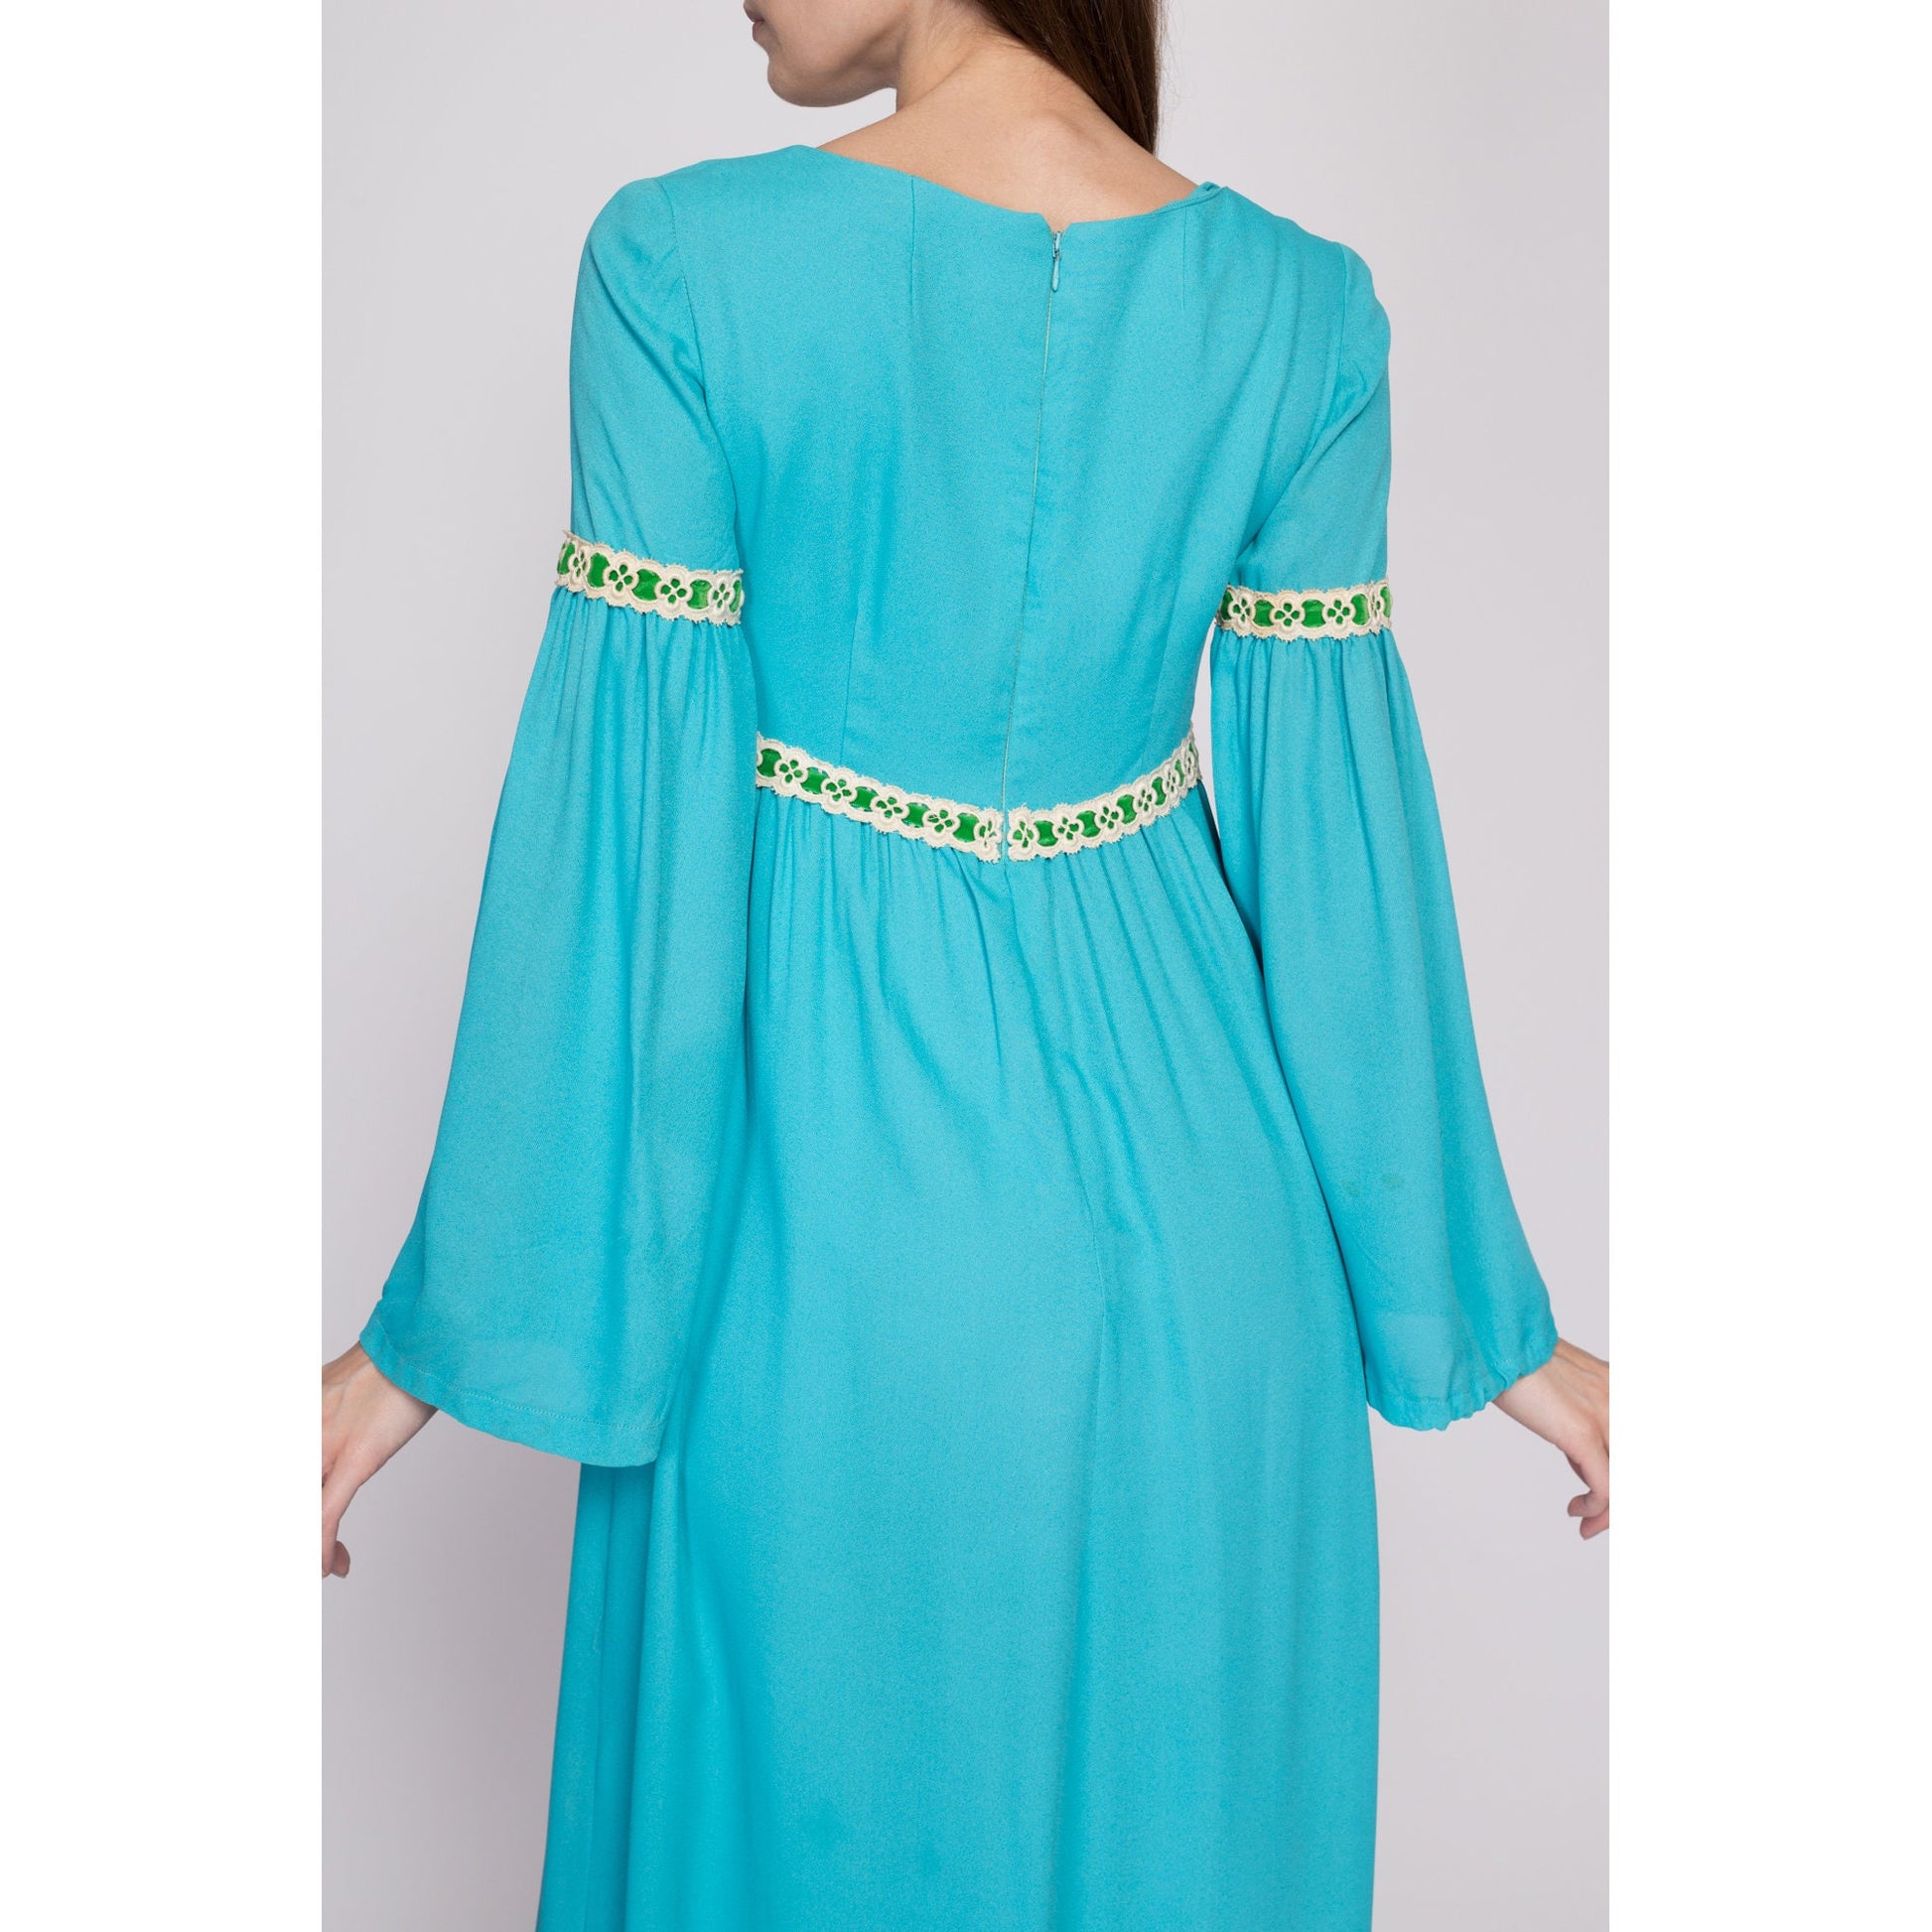 XS| 60s Boho Blue Empire Waist Bell Sleeve Maxi Dress, As Is - Extra Small | Vintage Aqua Lace Trim Hippie Renaissance Costume Gown